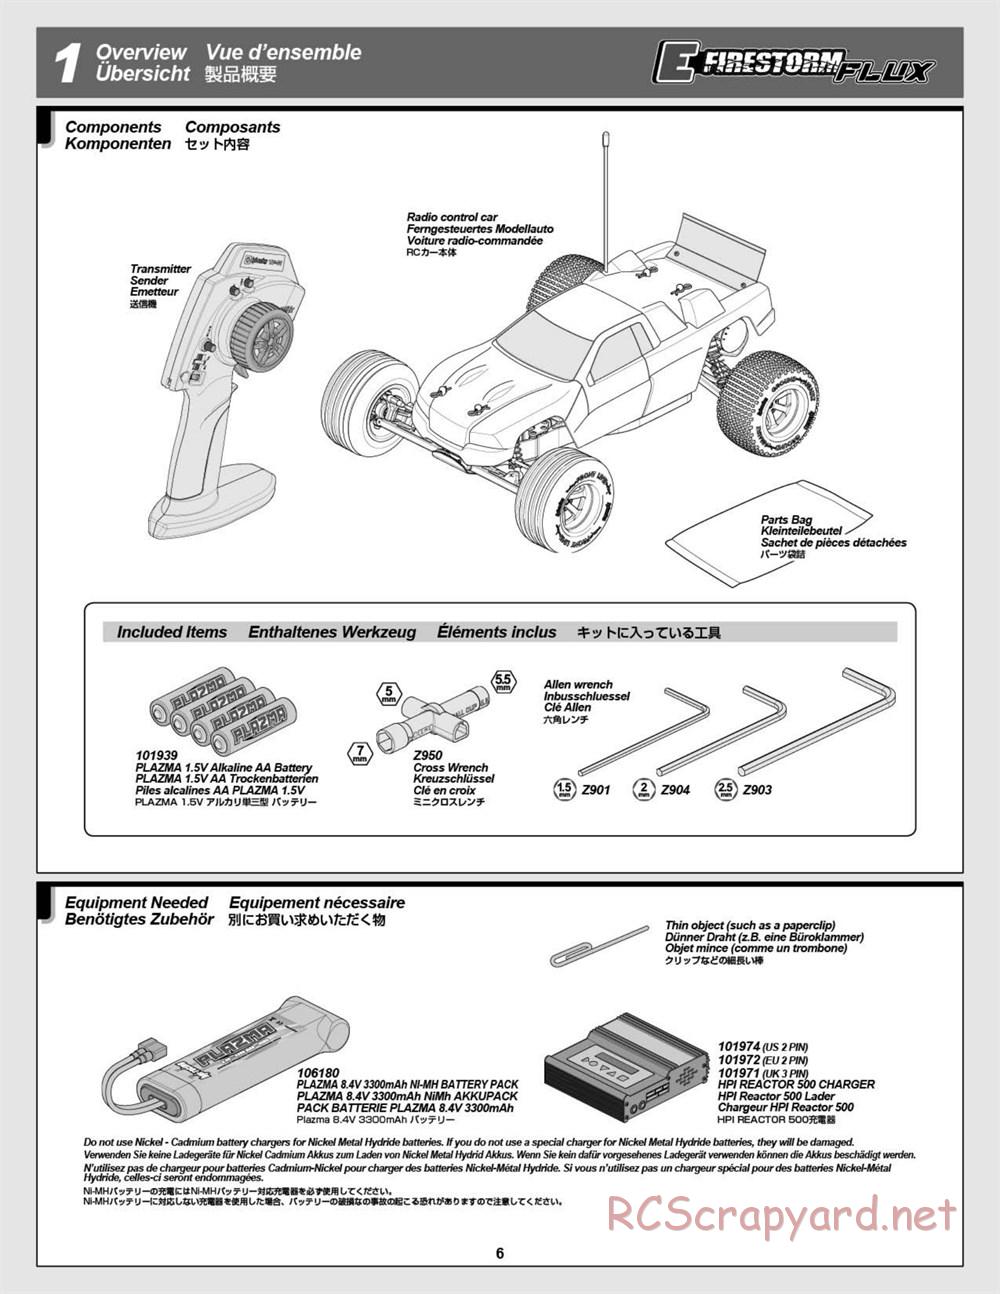 HPI - E-Firestorm 10T Flux - Manual - Page 6